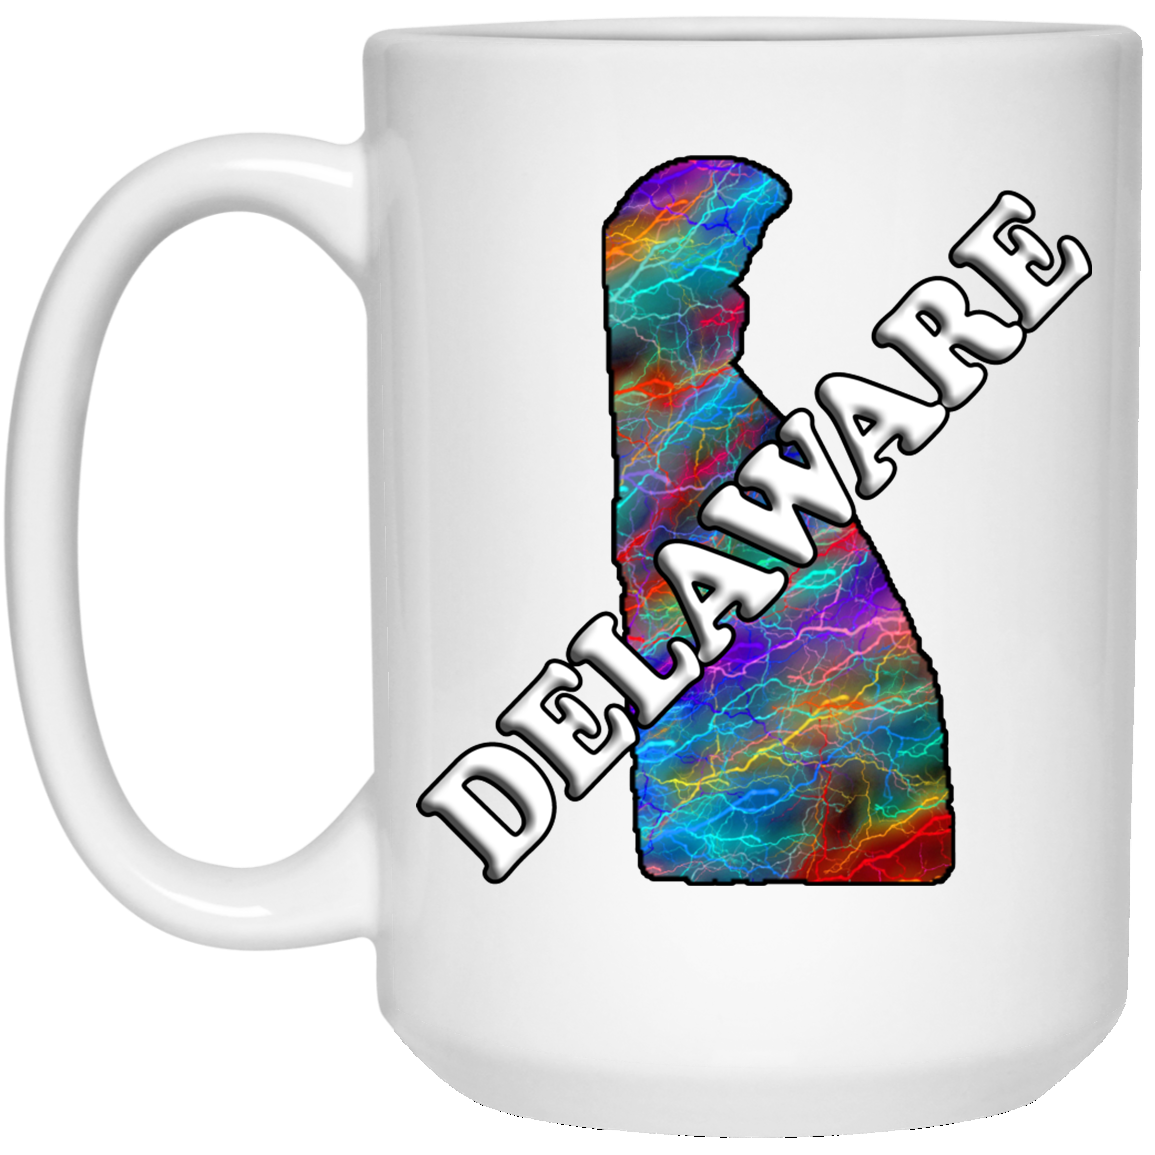 Delaware Mug